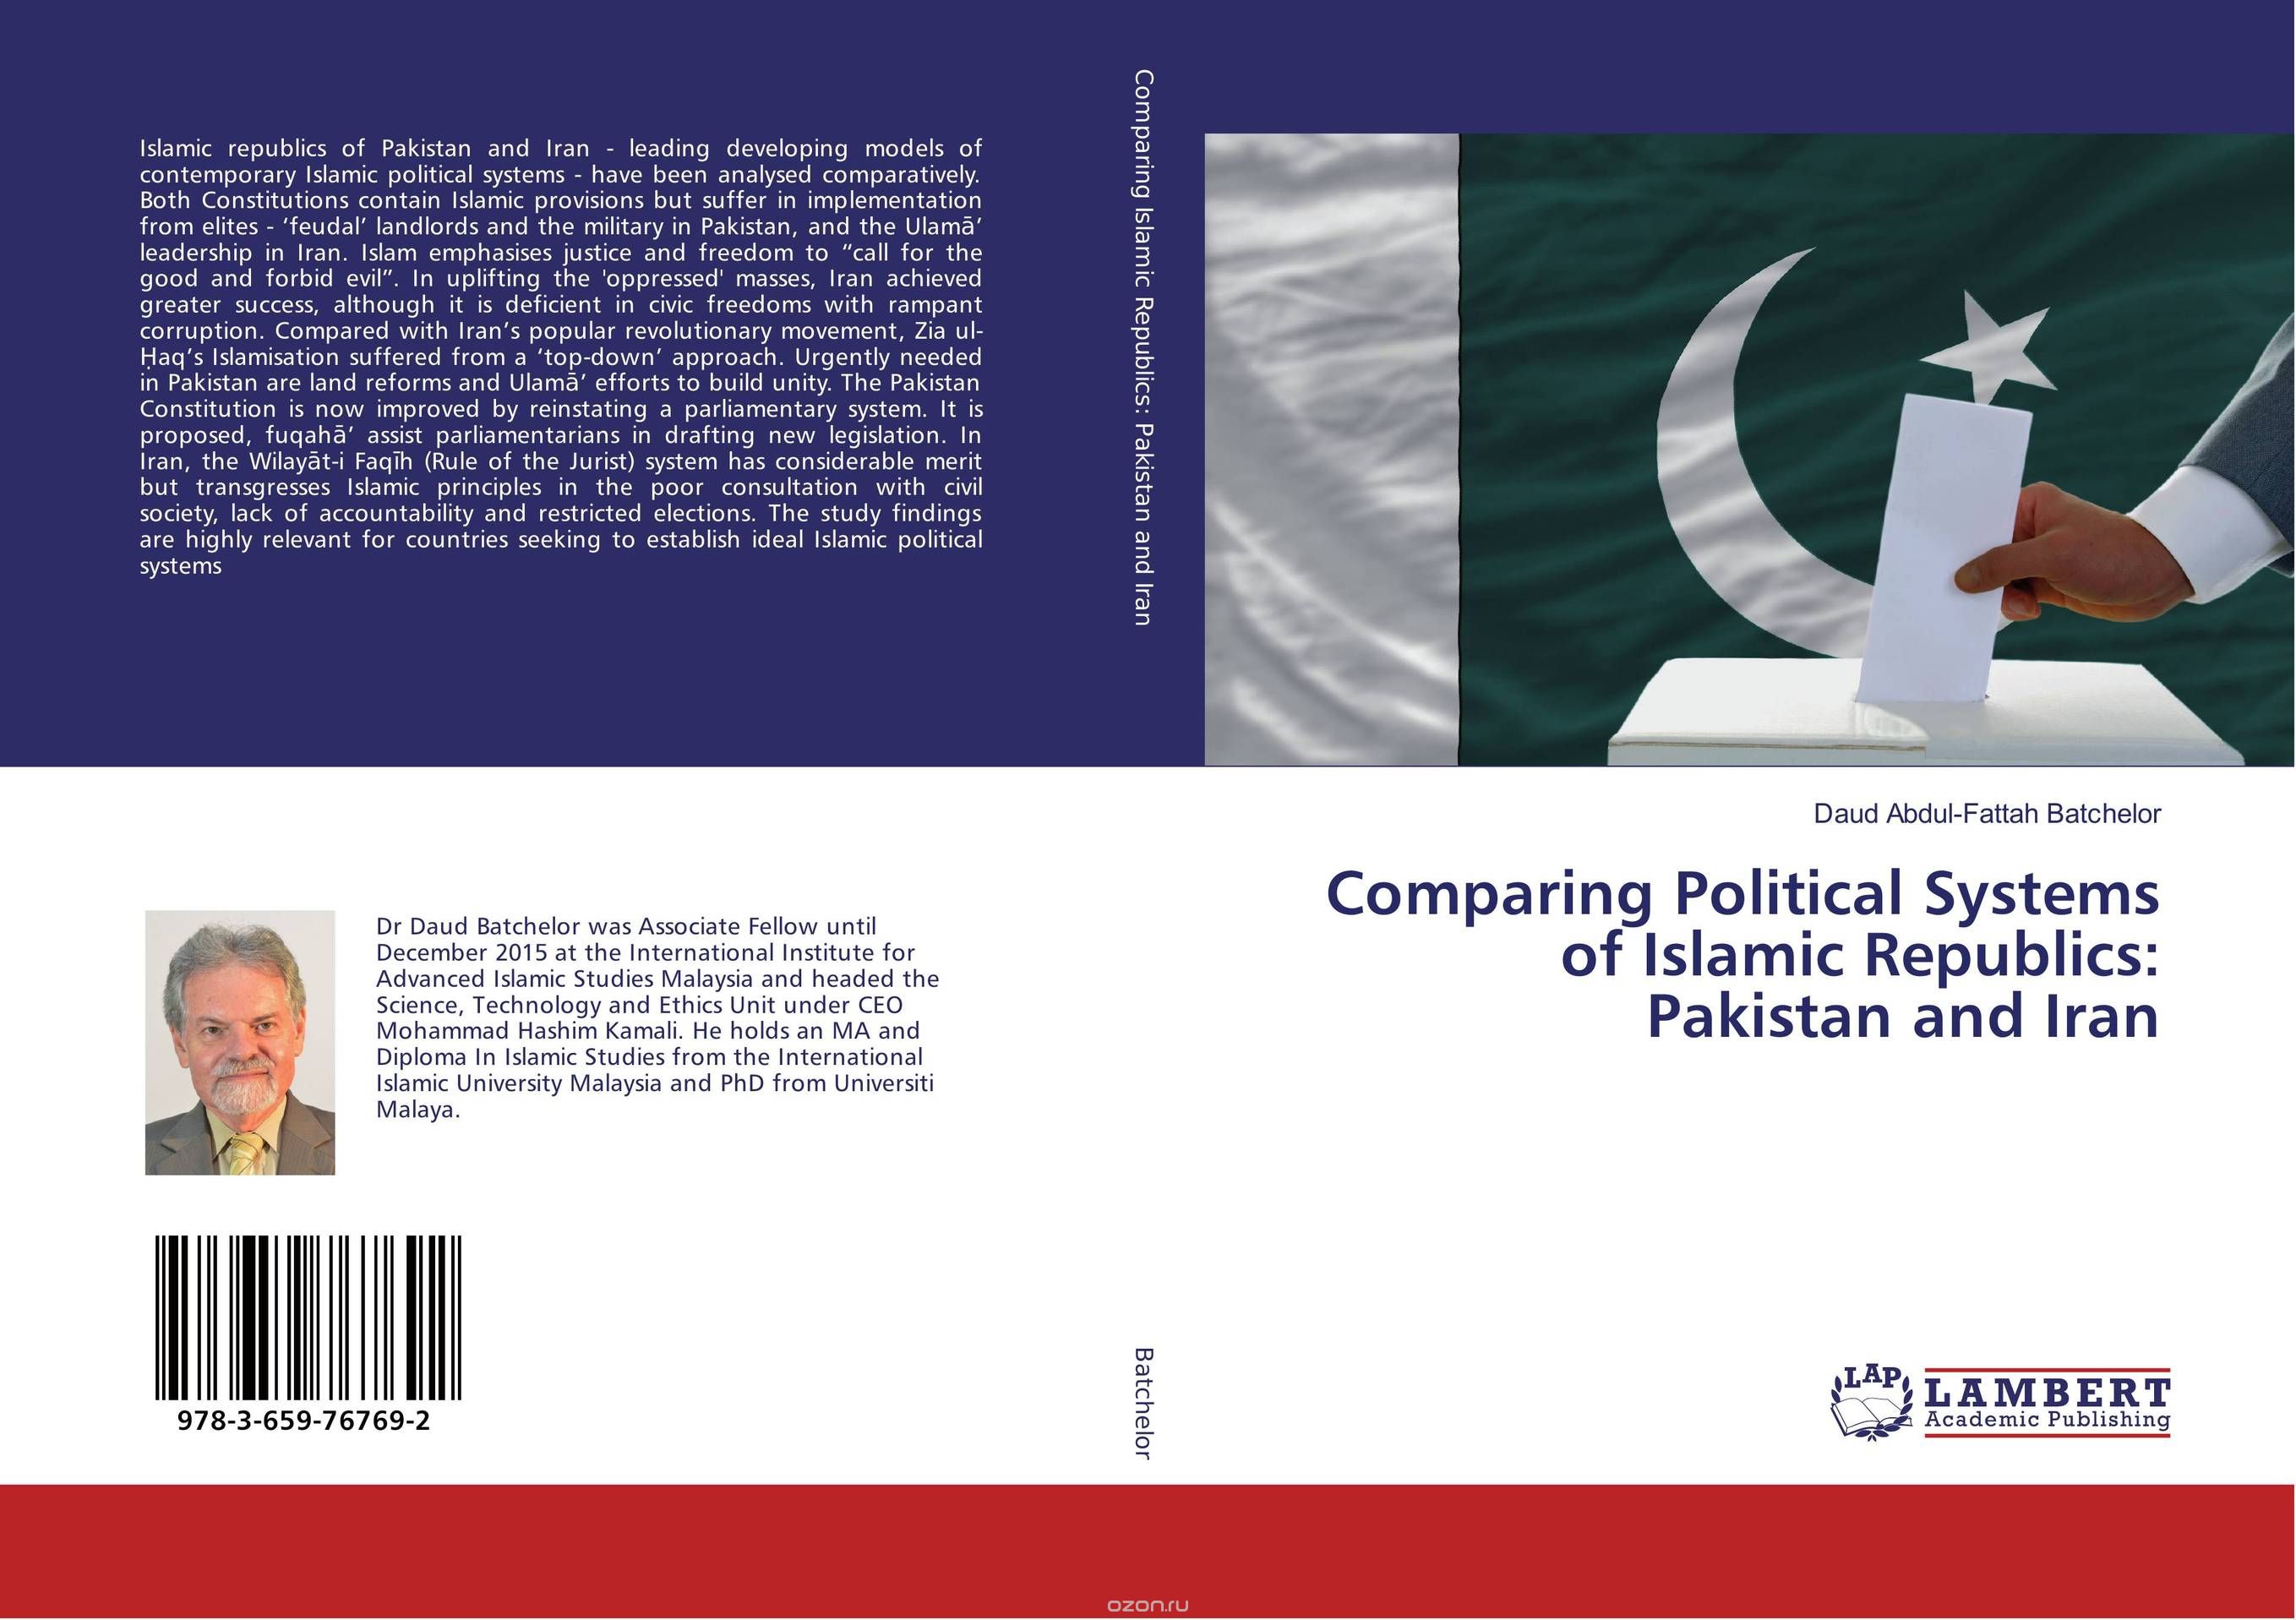 Скачать книгу "Comparing Political Systems of Islamic Republics: Pakistan and Iran"